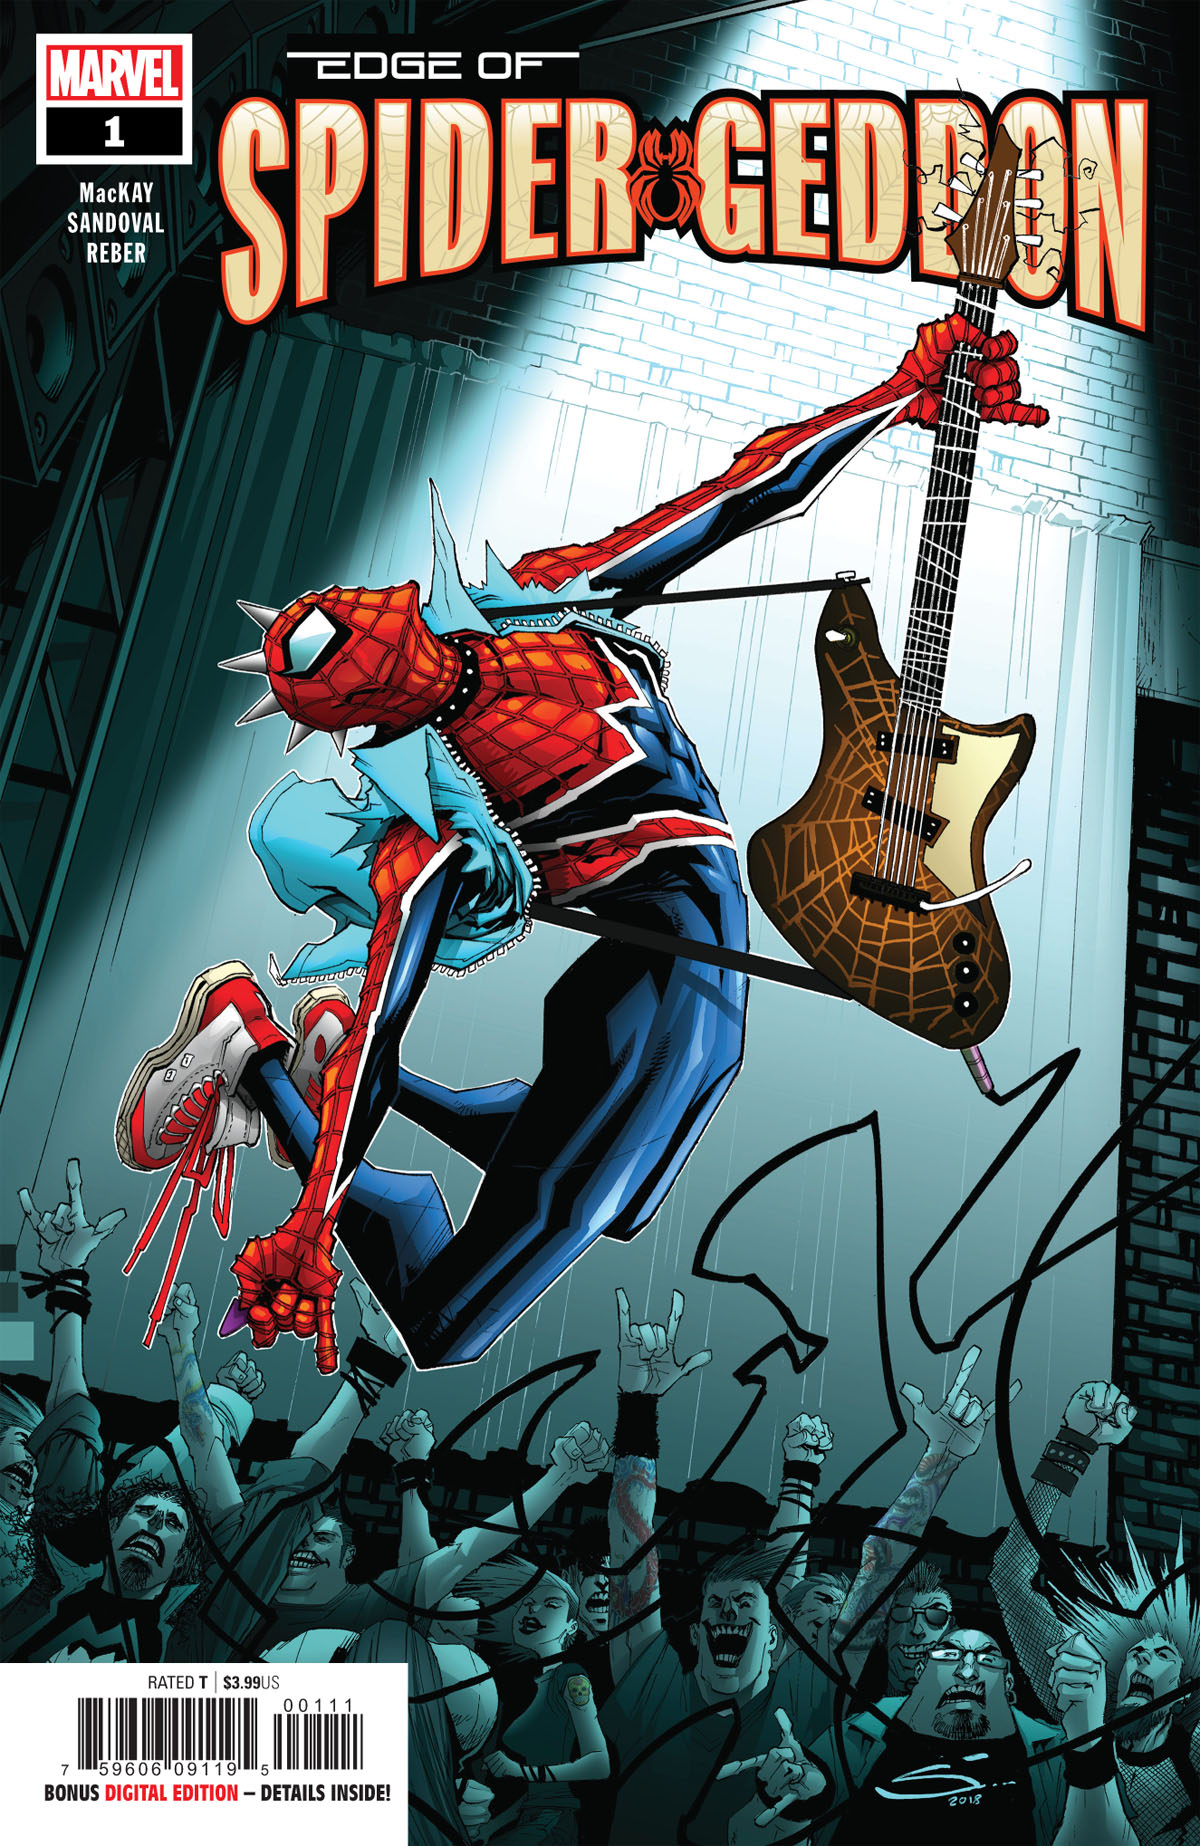 Edge of Spider-Geddon #1 cover